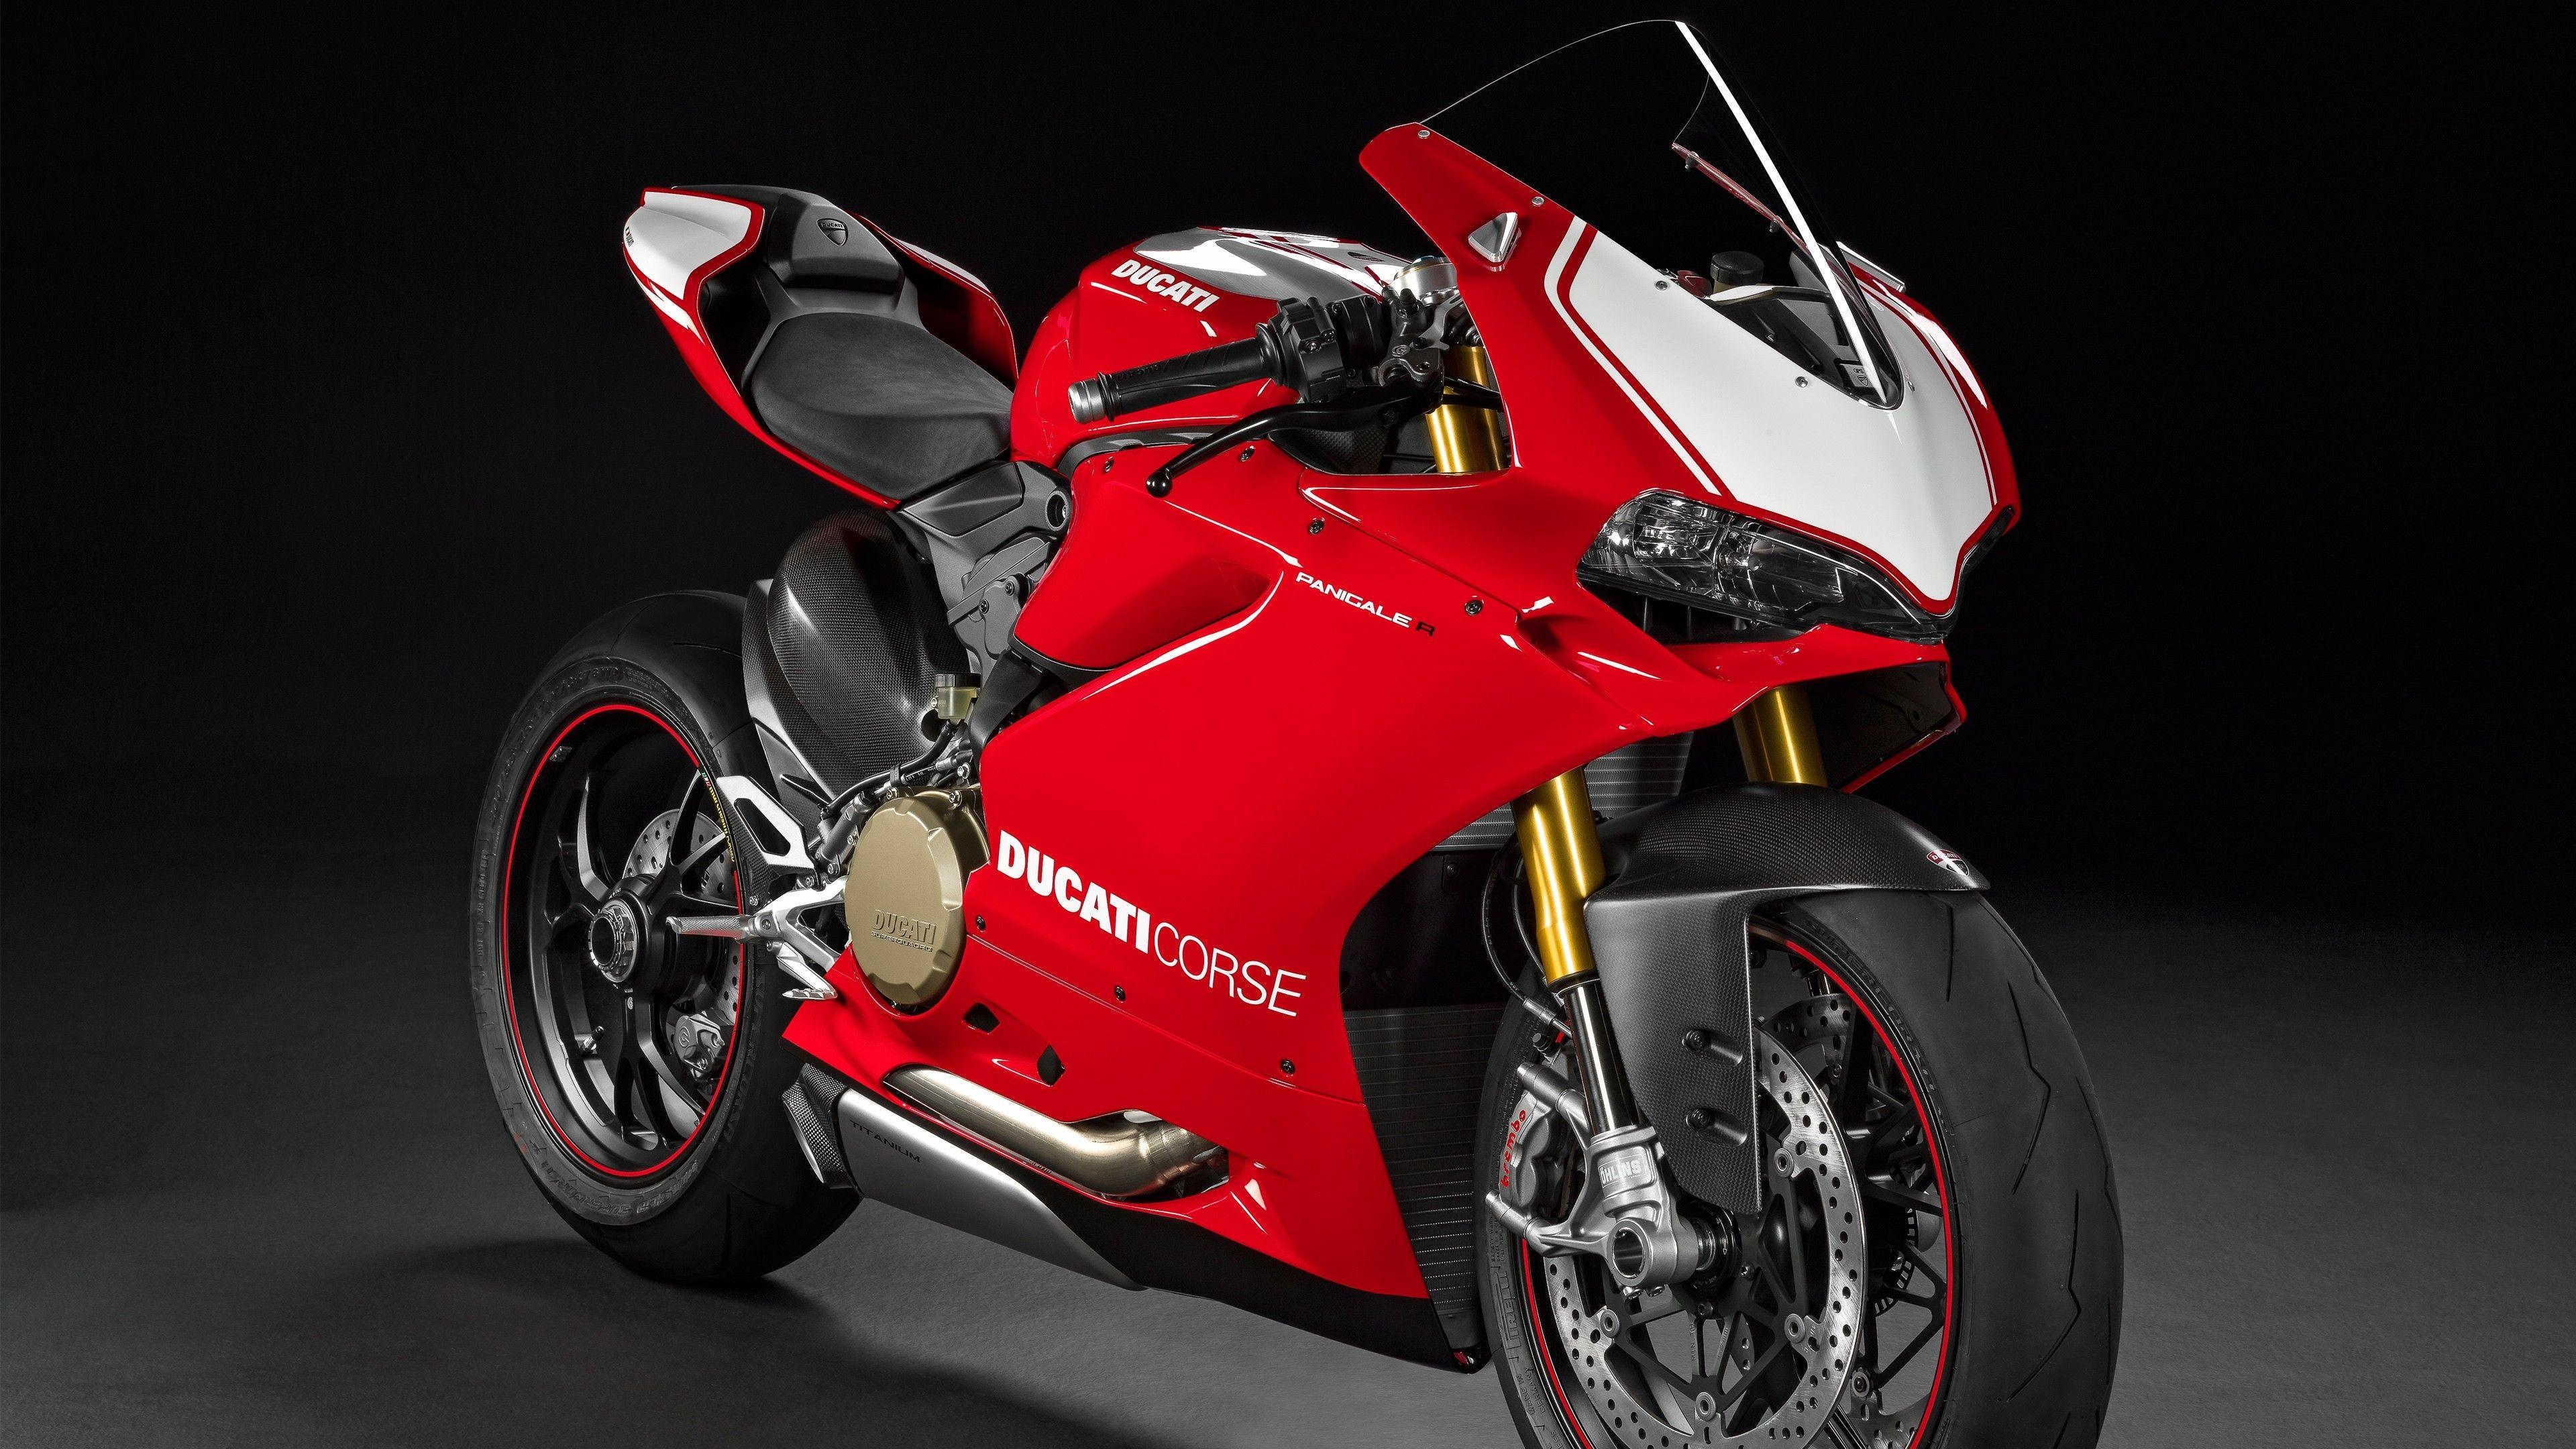 Superbike: Ducati Panigale R, The Superbike World Championship homologation model, Ducati Corse. 3840x2160 4K Wallpaper.